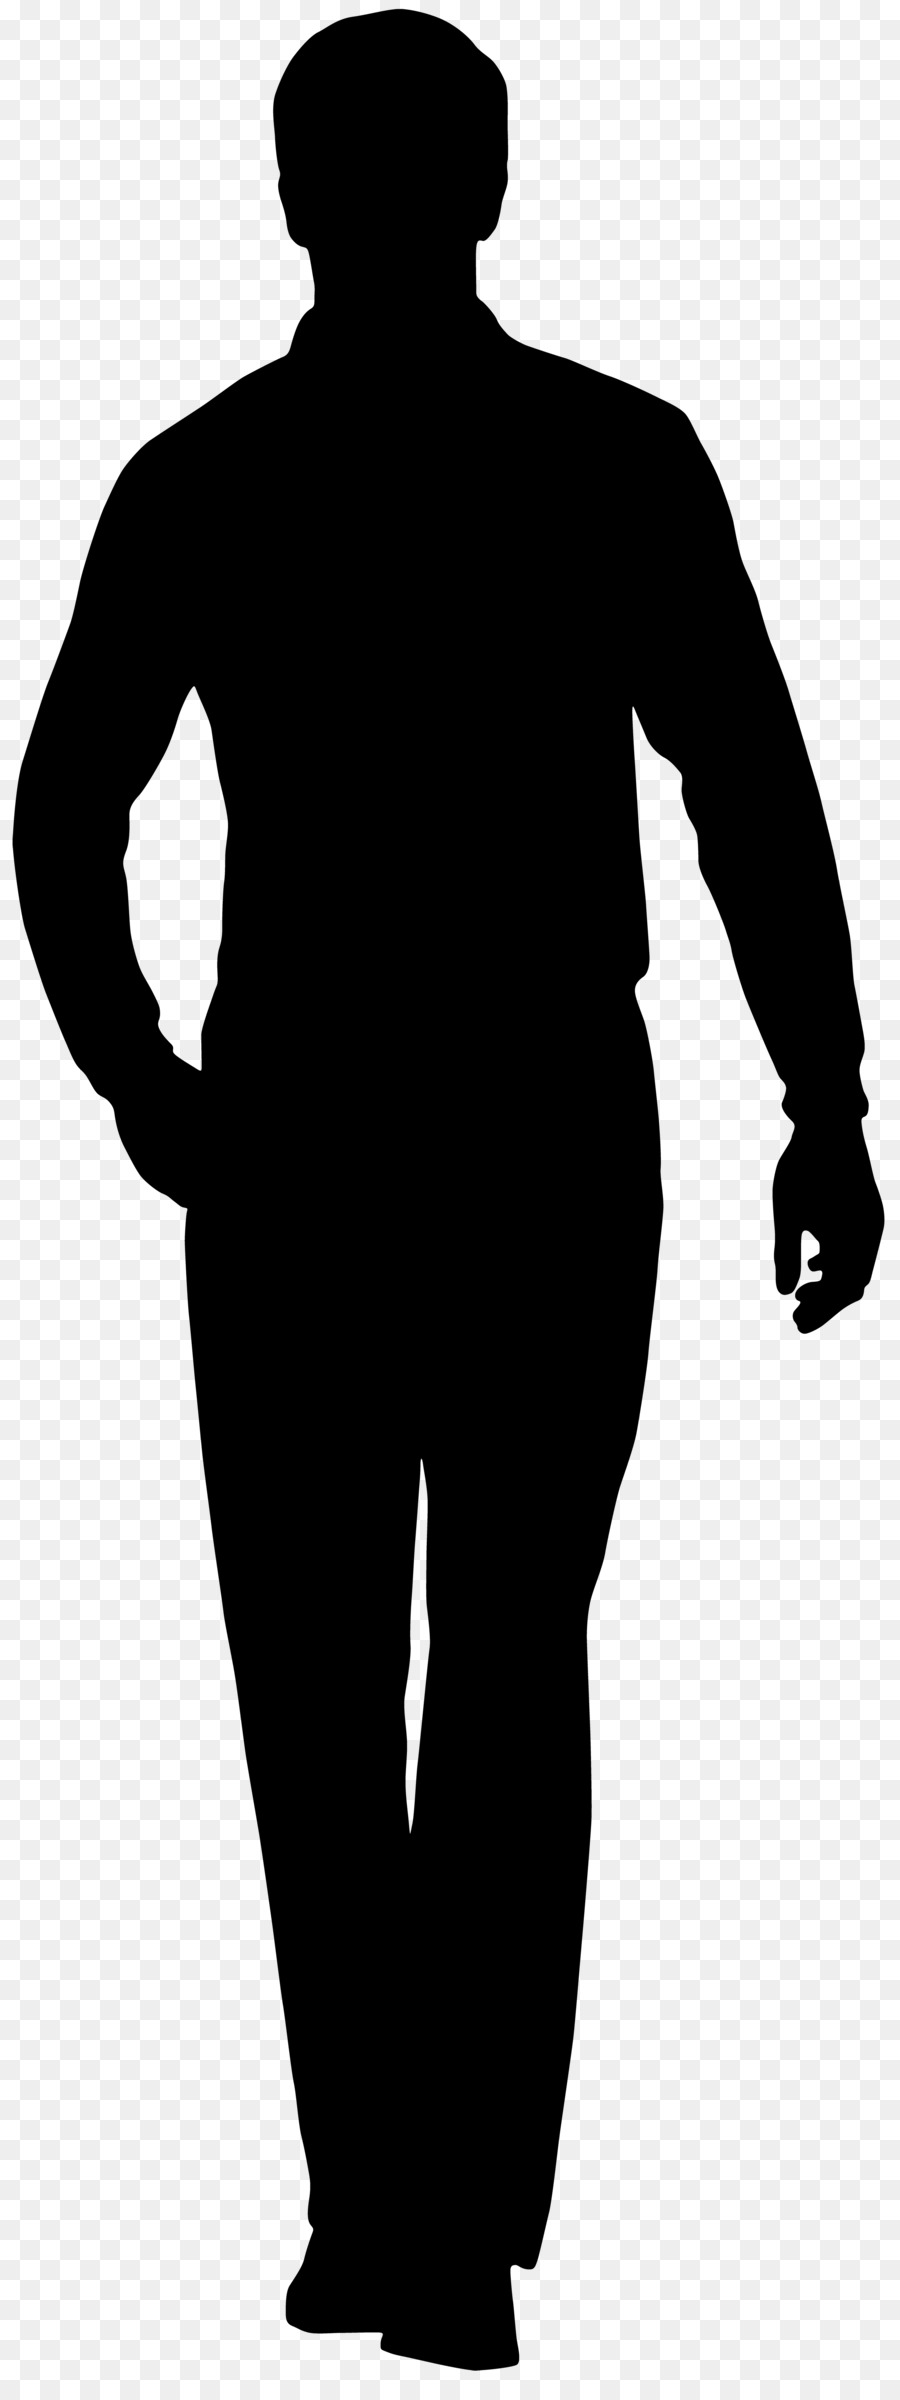 Silhouette Male Clip art - man silhouette png download - 3019*8000 - Free Transparent Silhouette png Download.